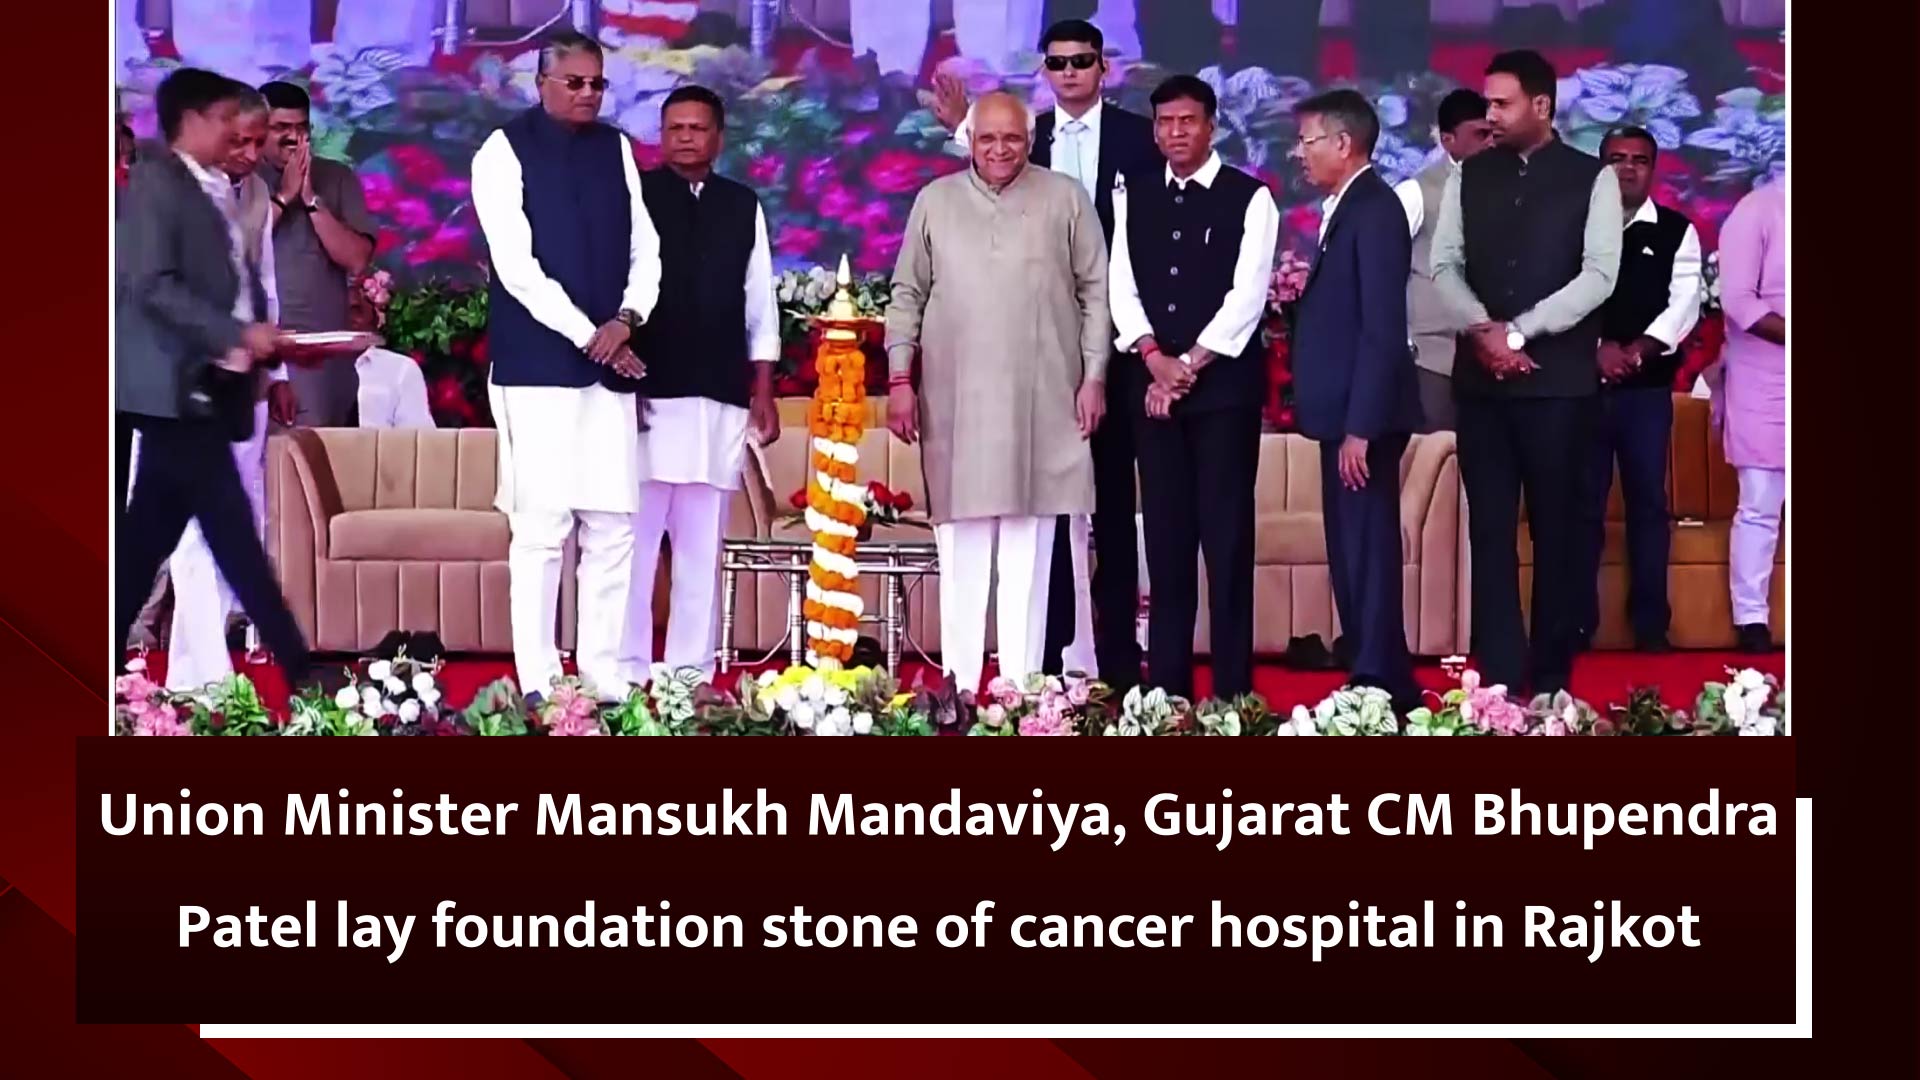 Union Minister Mansukh Mandaviya, Gujarat CM Bhupendra Patel lay foundation stone of cancer hospital in Rajkot